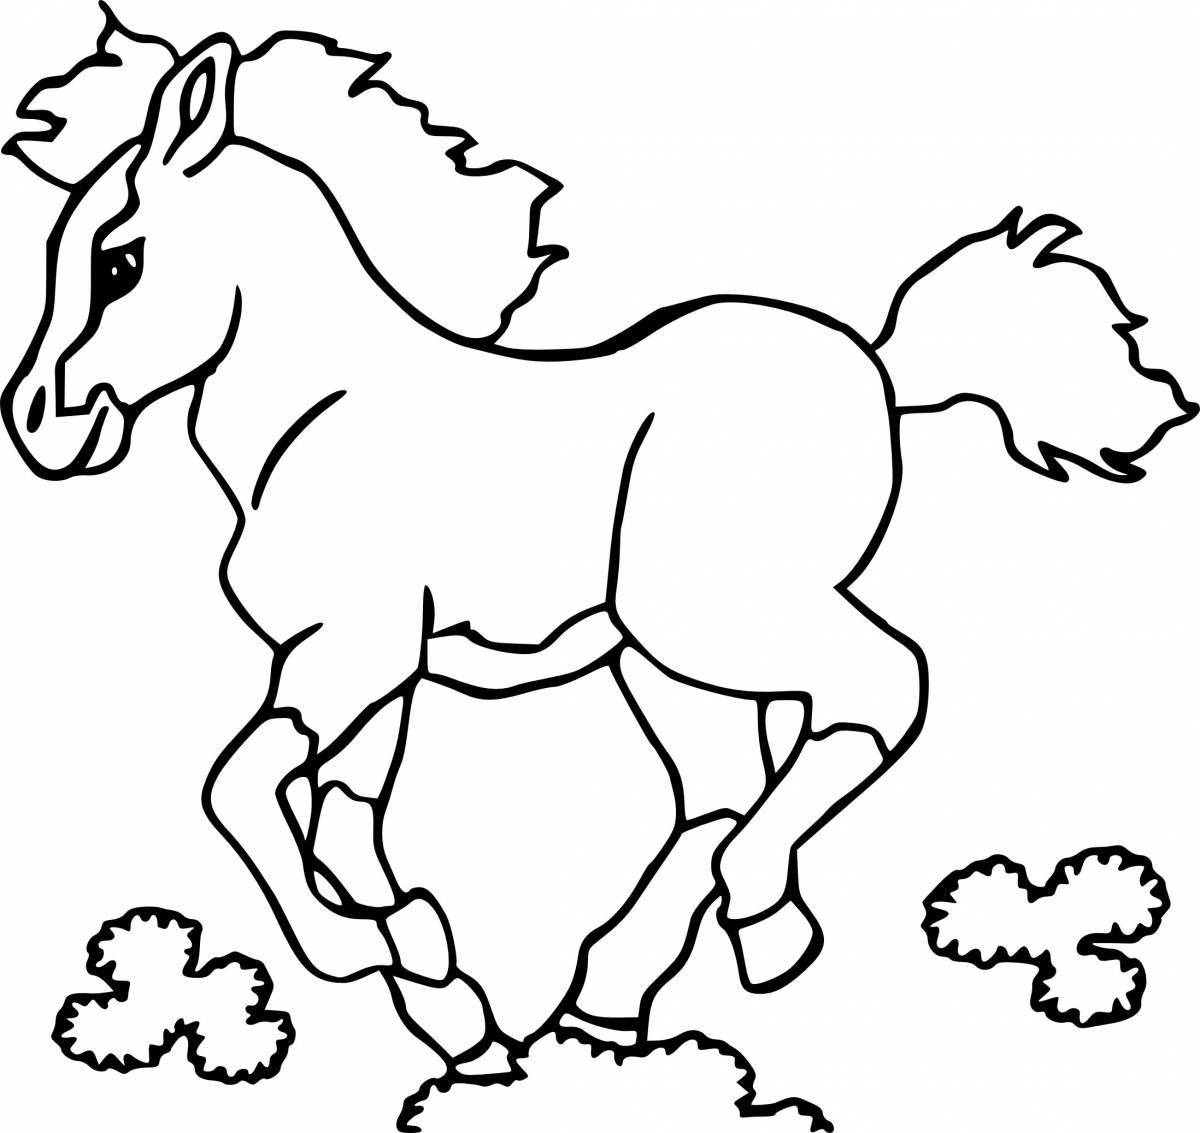 Color-mania horse coloring page для детей 2-3 лет